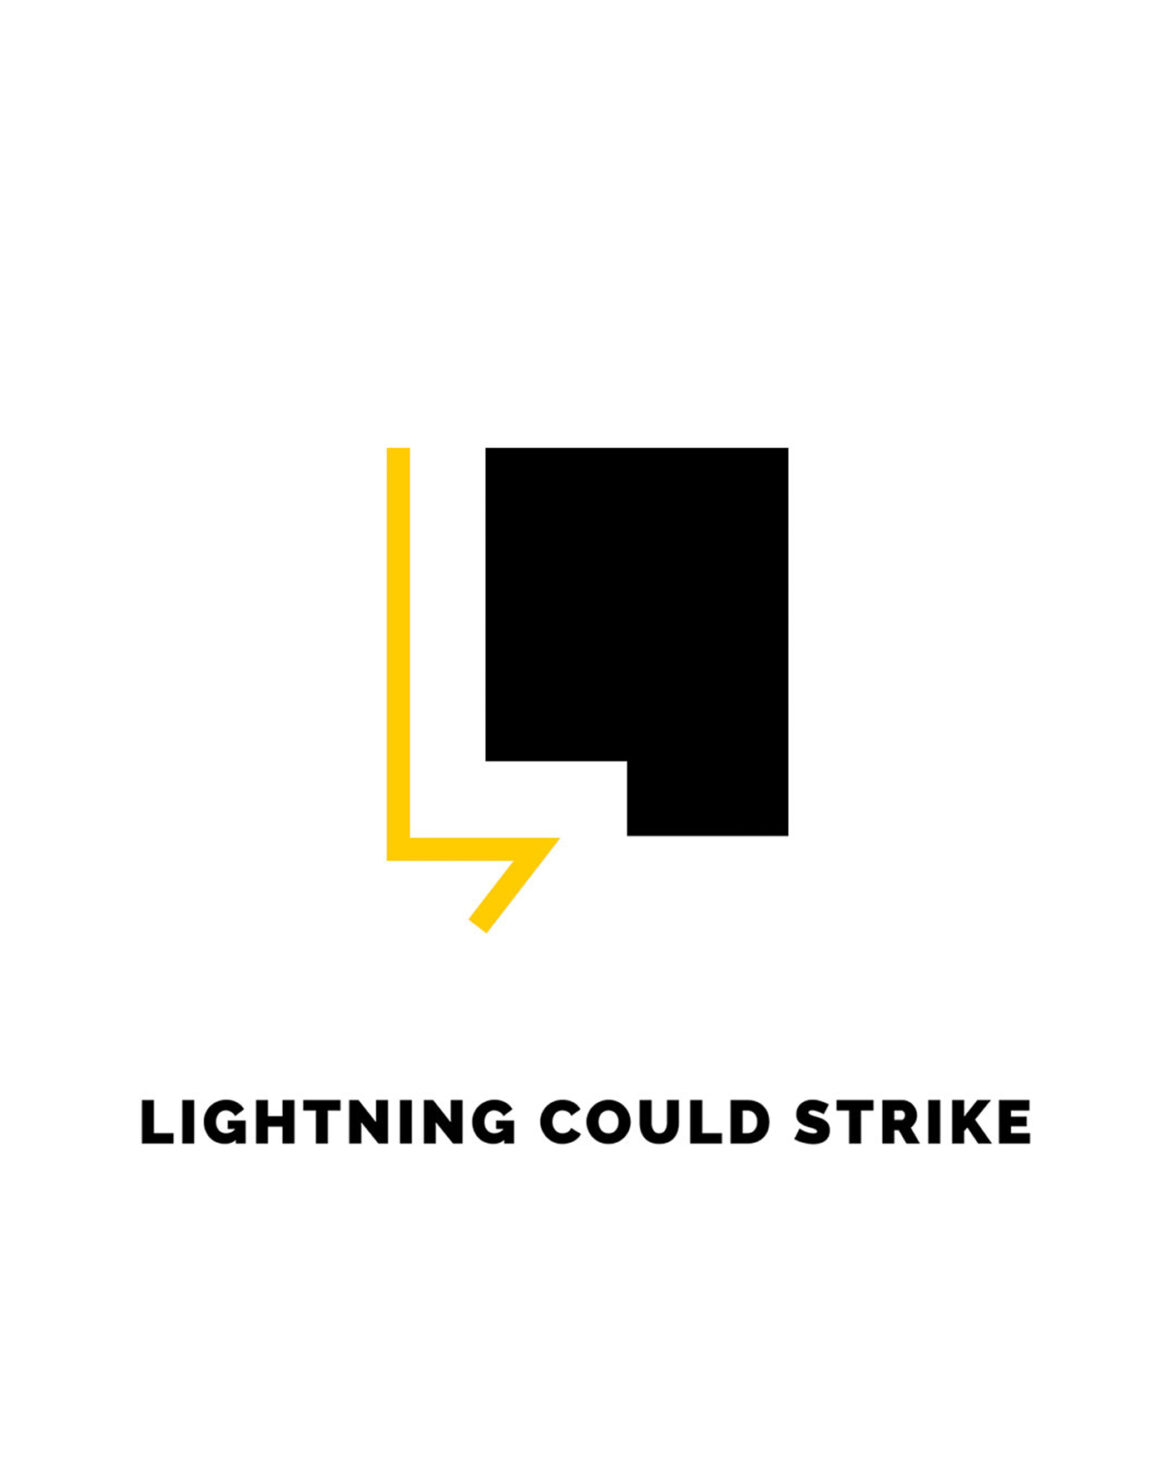 Lightning could strike | logo